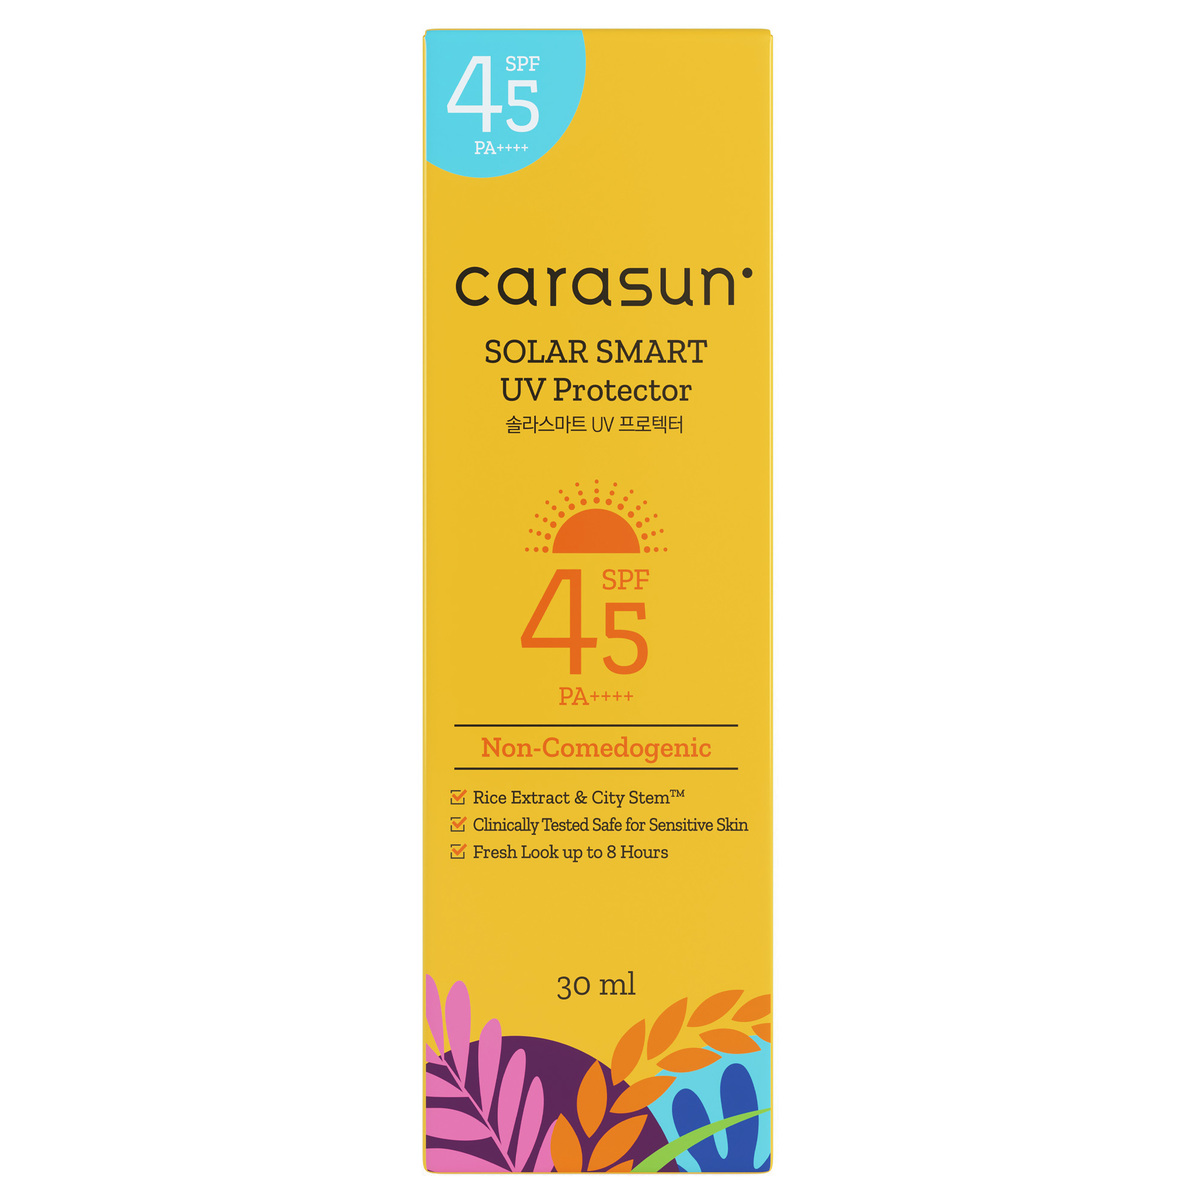 Carasun Solar Smart Uv Protector Spf45 30ml